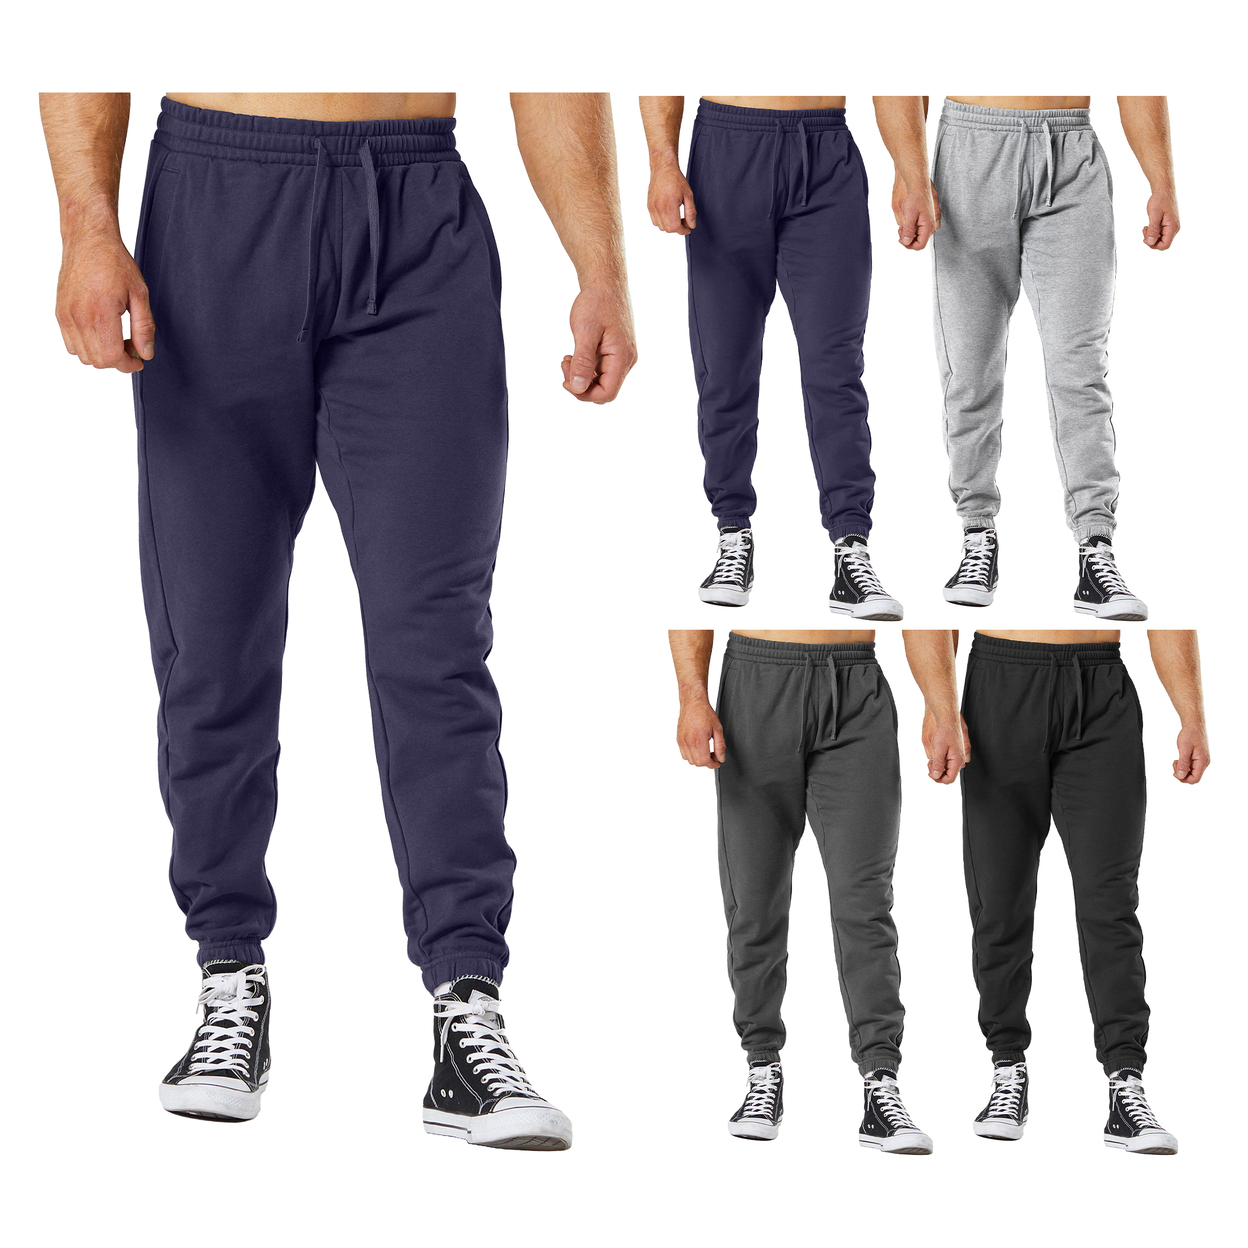 Men's Ultra-Soft Cozy Winter Warm Casual Fleece Lined Sweatpants Jogger - Grey, X-large